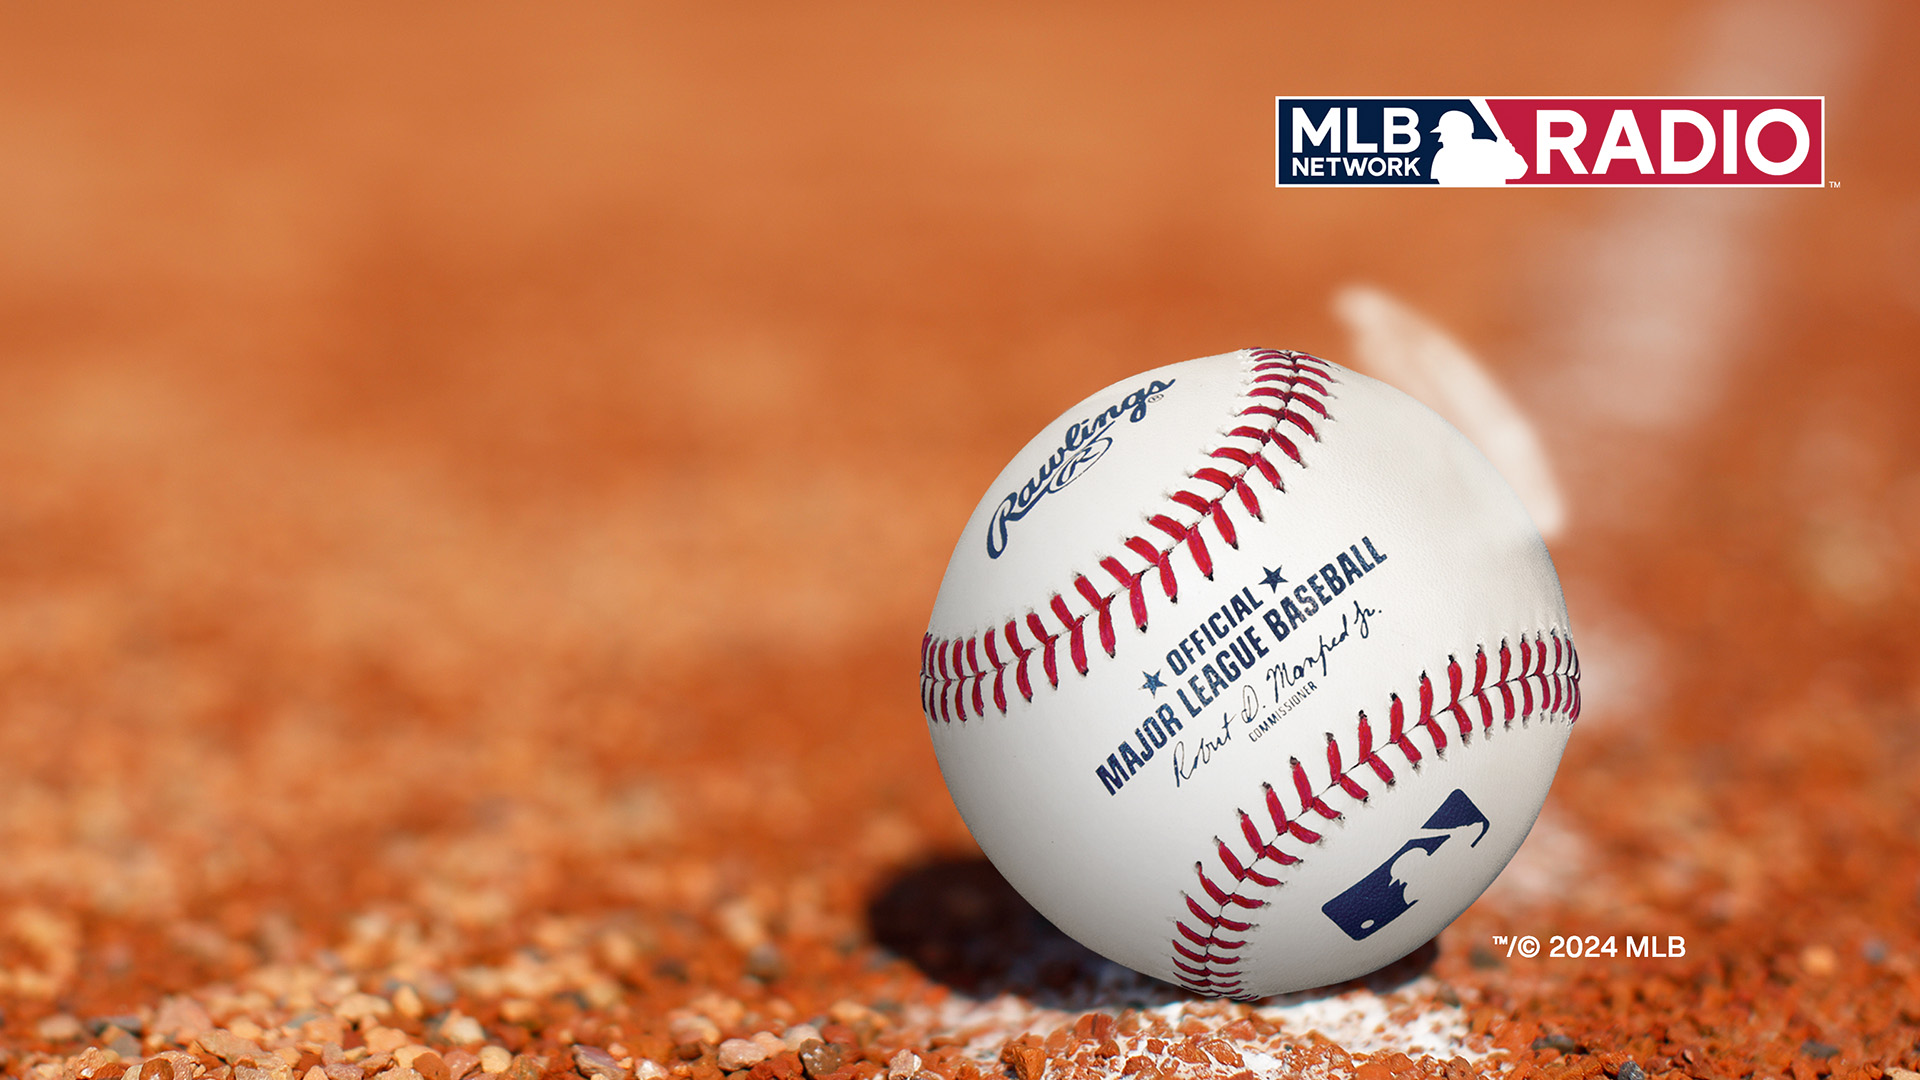 SiriusXM MLB Network Radio logo over a photo of a baseball on infield dirt copyright 2024